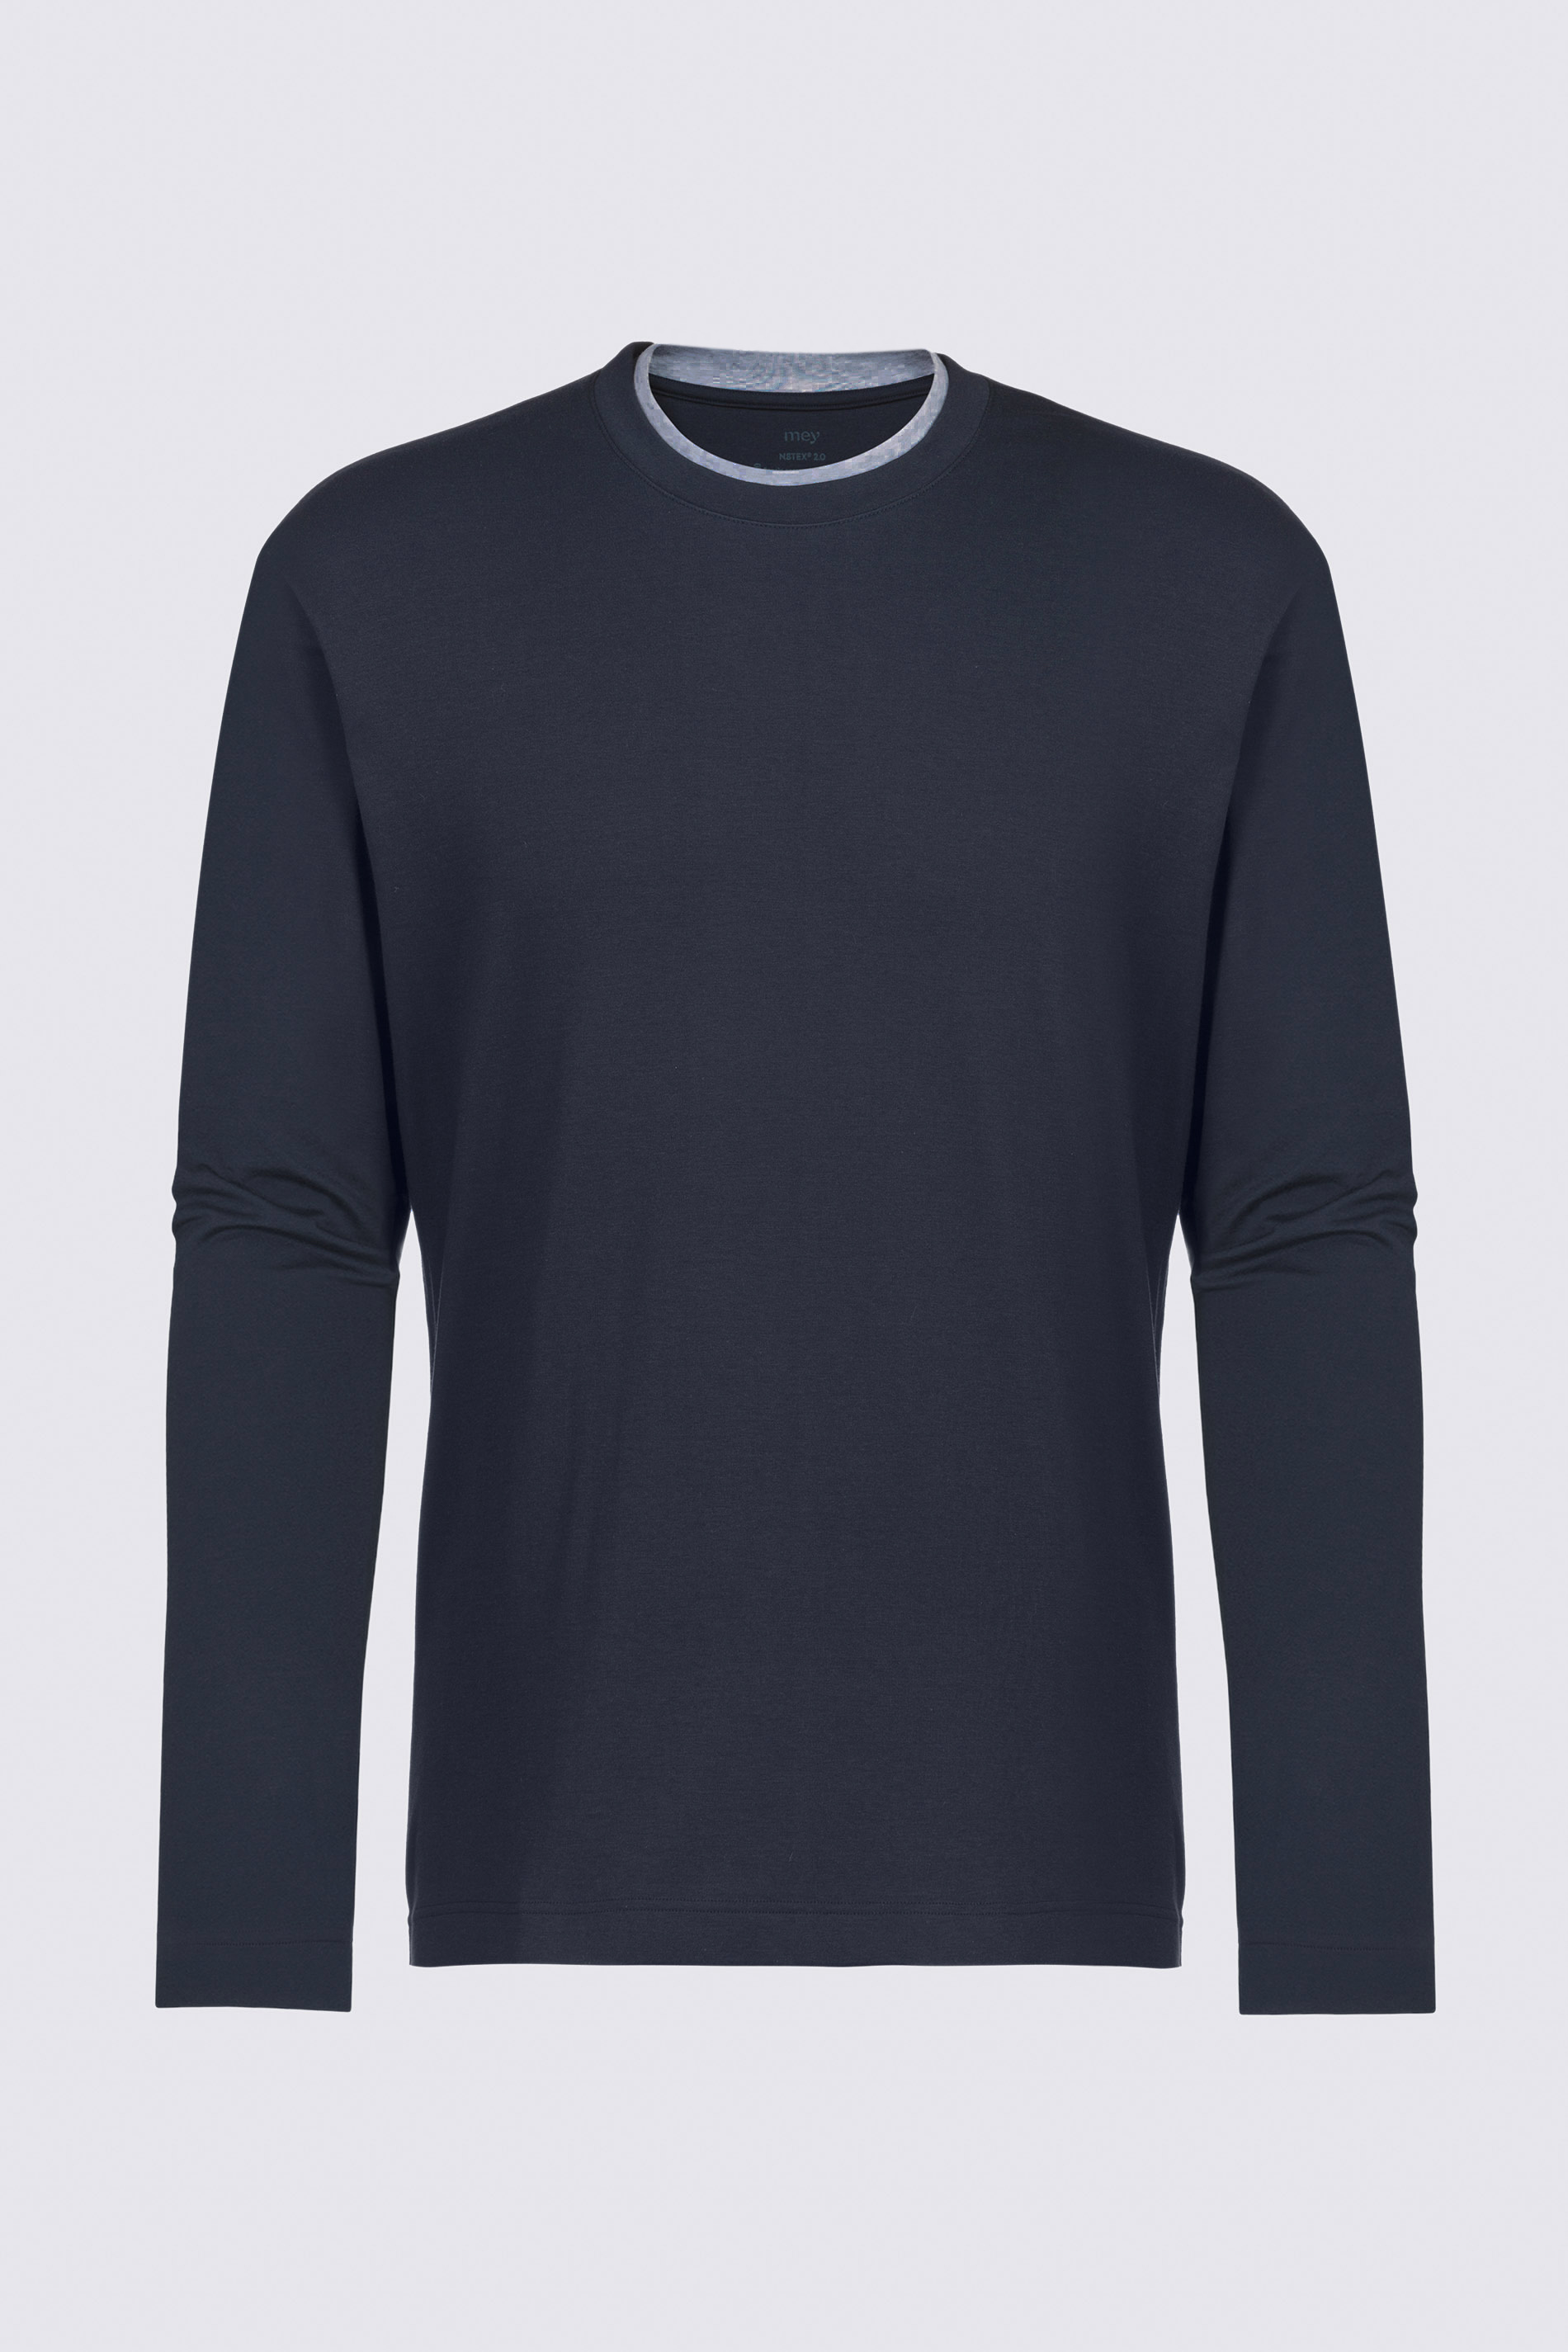 Long-sleeved shirt Serie N8TEX 2.0 Cut Out | mey®